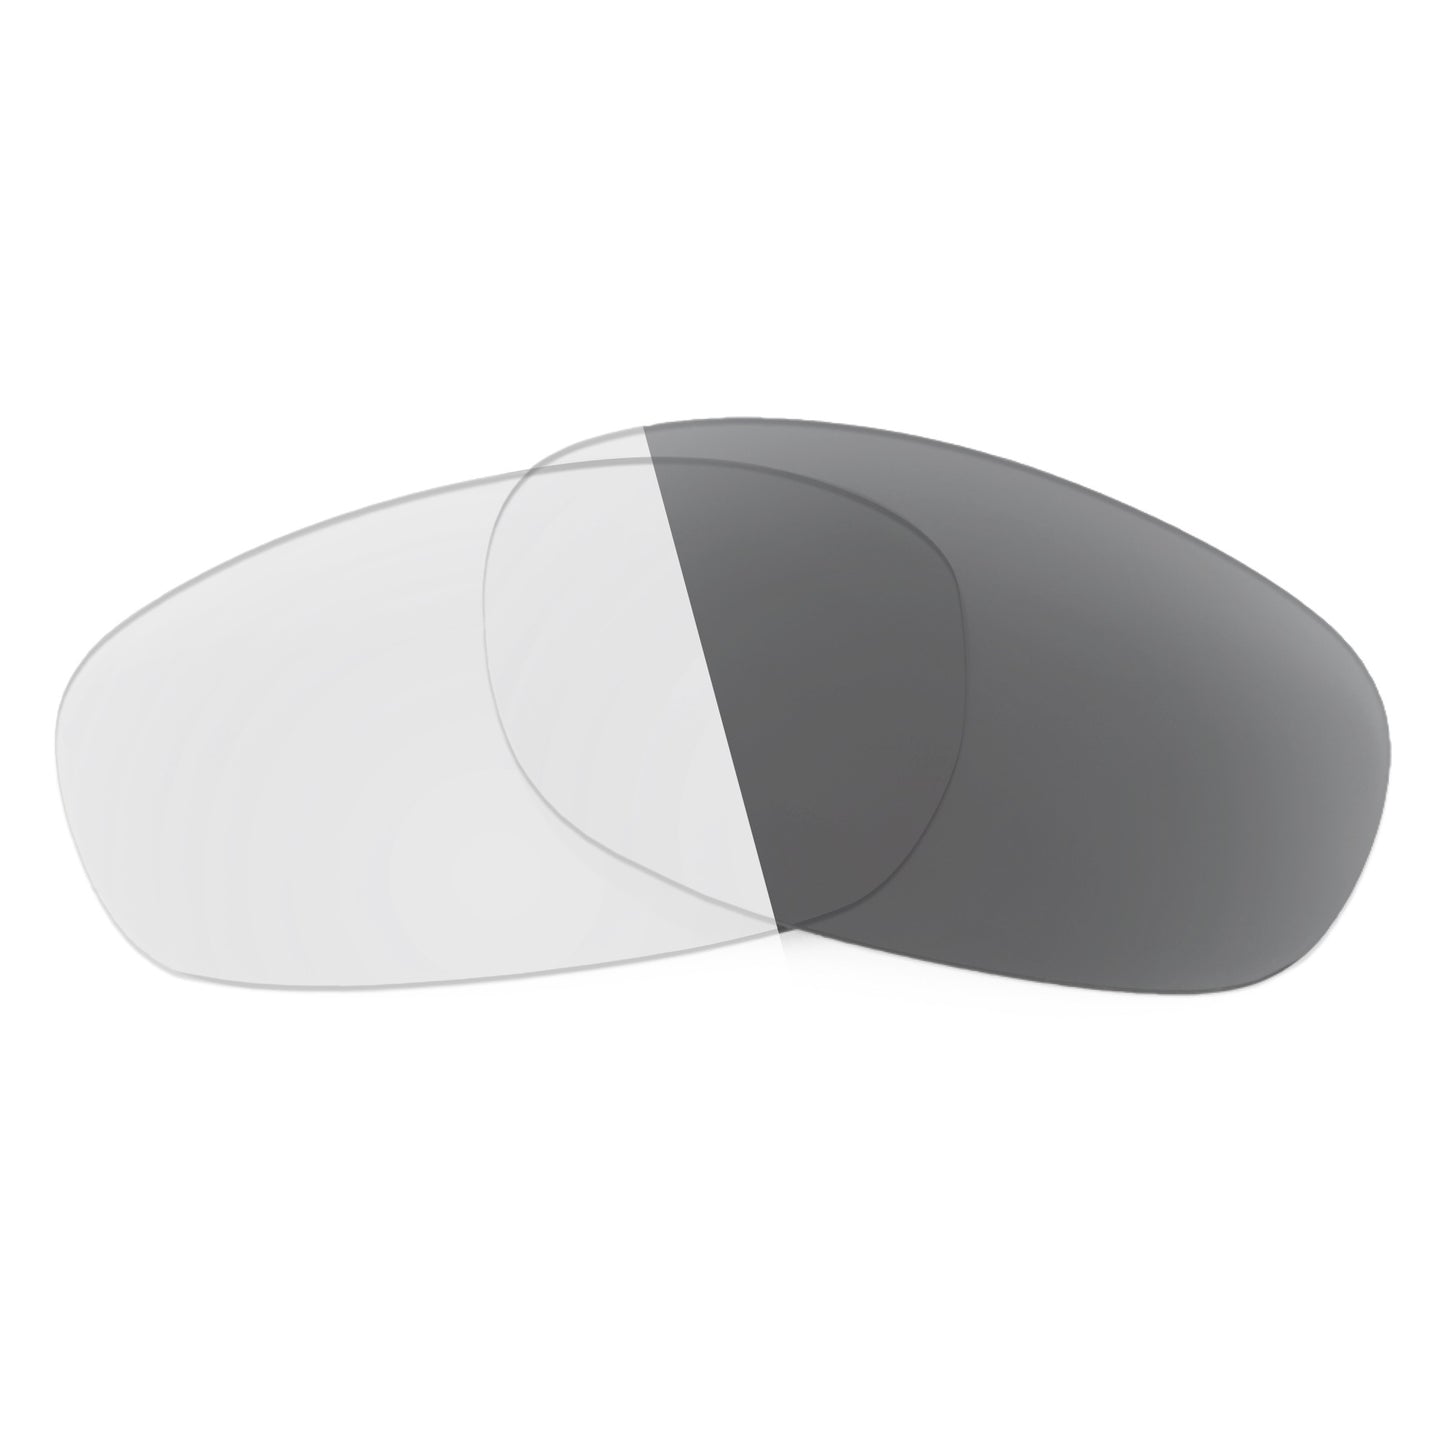 Revant replacement lenses for Native Throttle Non-Polarized Adapt Gray Photochromic